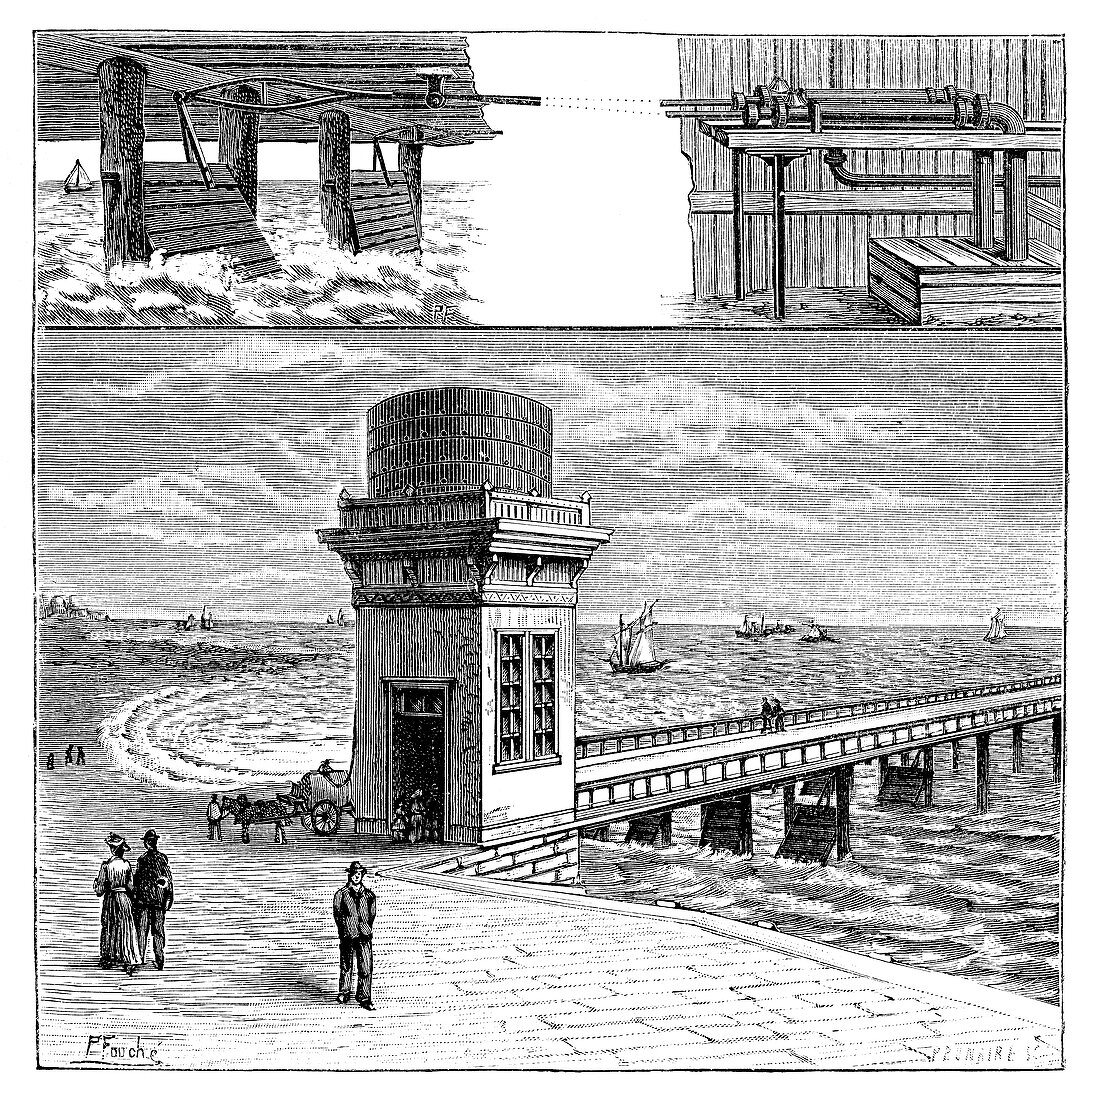 19th-century wave power